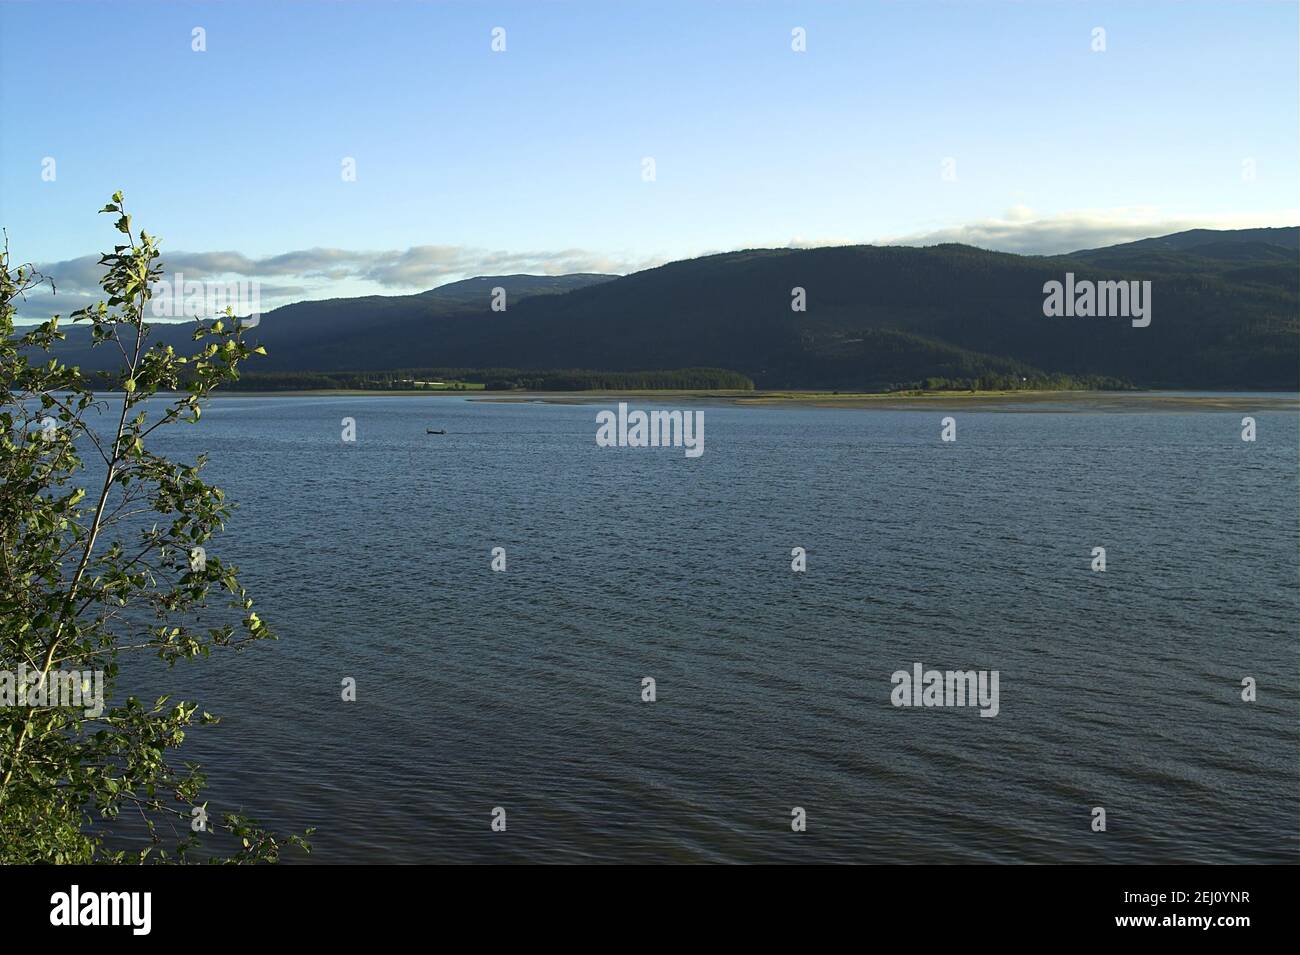 Norway, Norwegen; Lakes and hills surrounded by greenery - a typical summer landscape of central Norway. Eine typische Landschaft Mittelnorwegens. Stock Photo